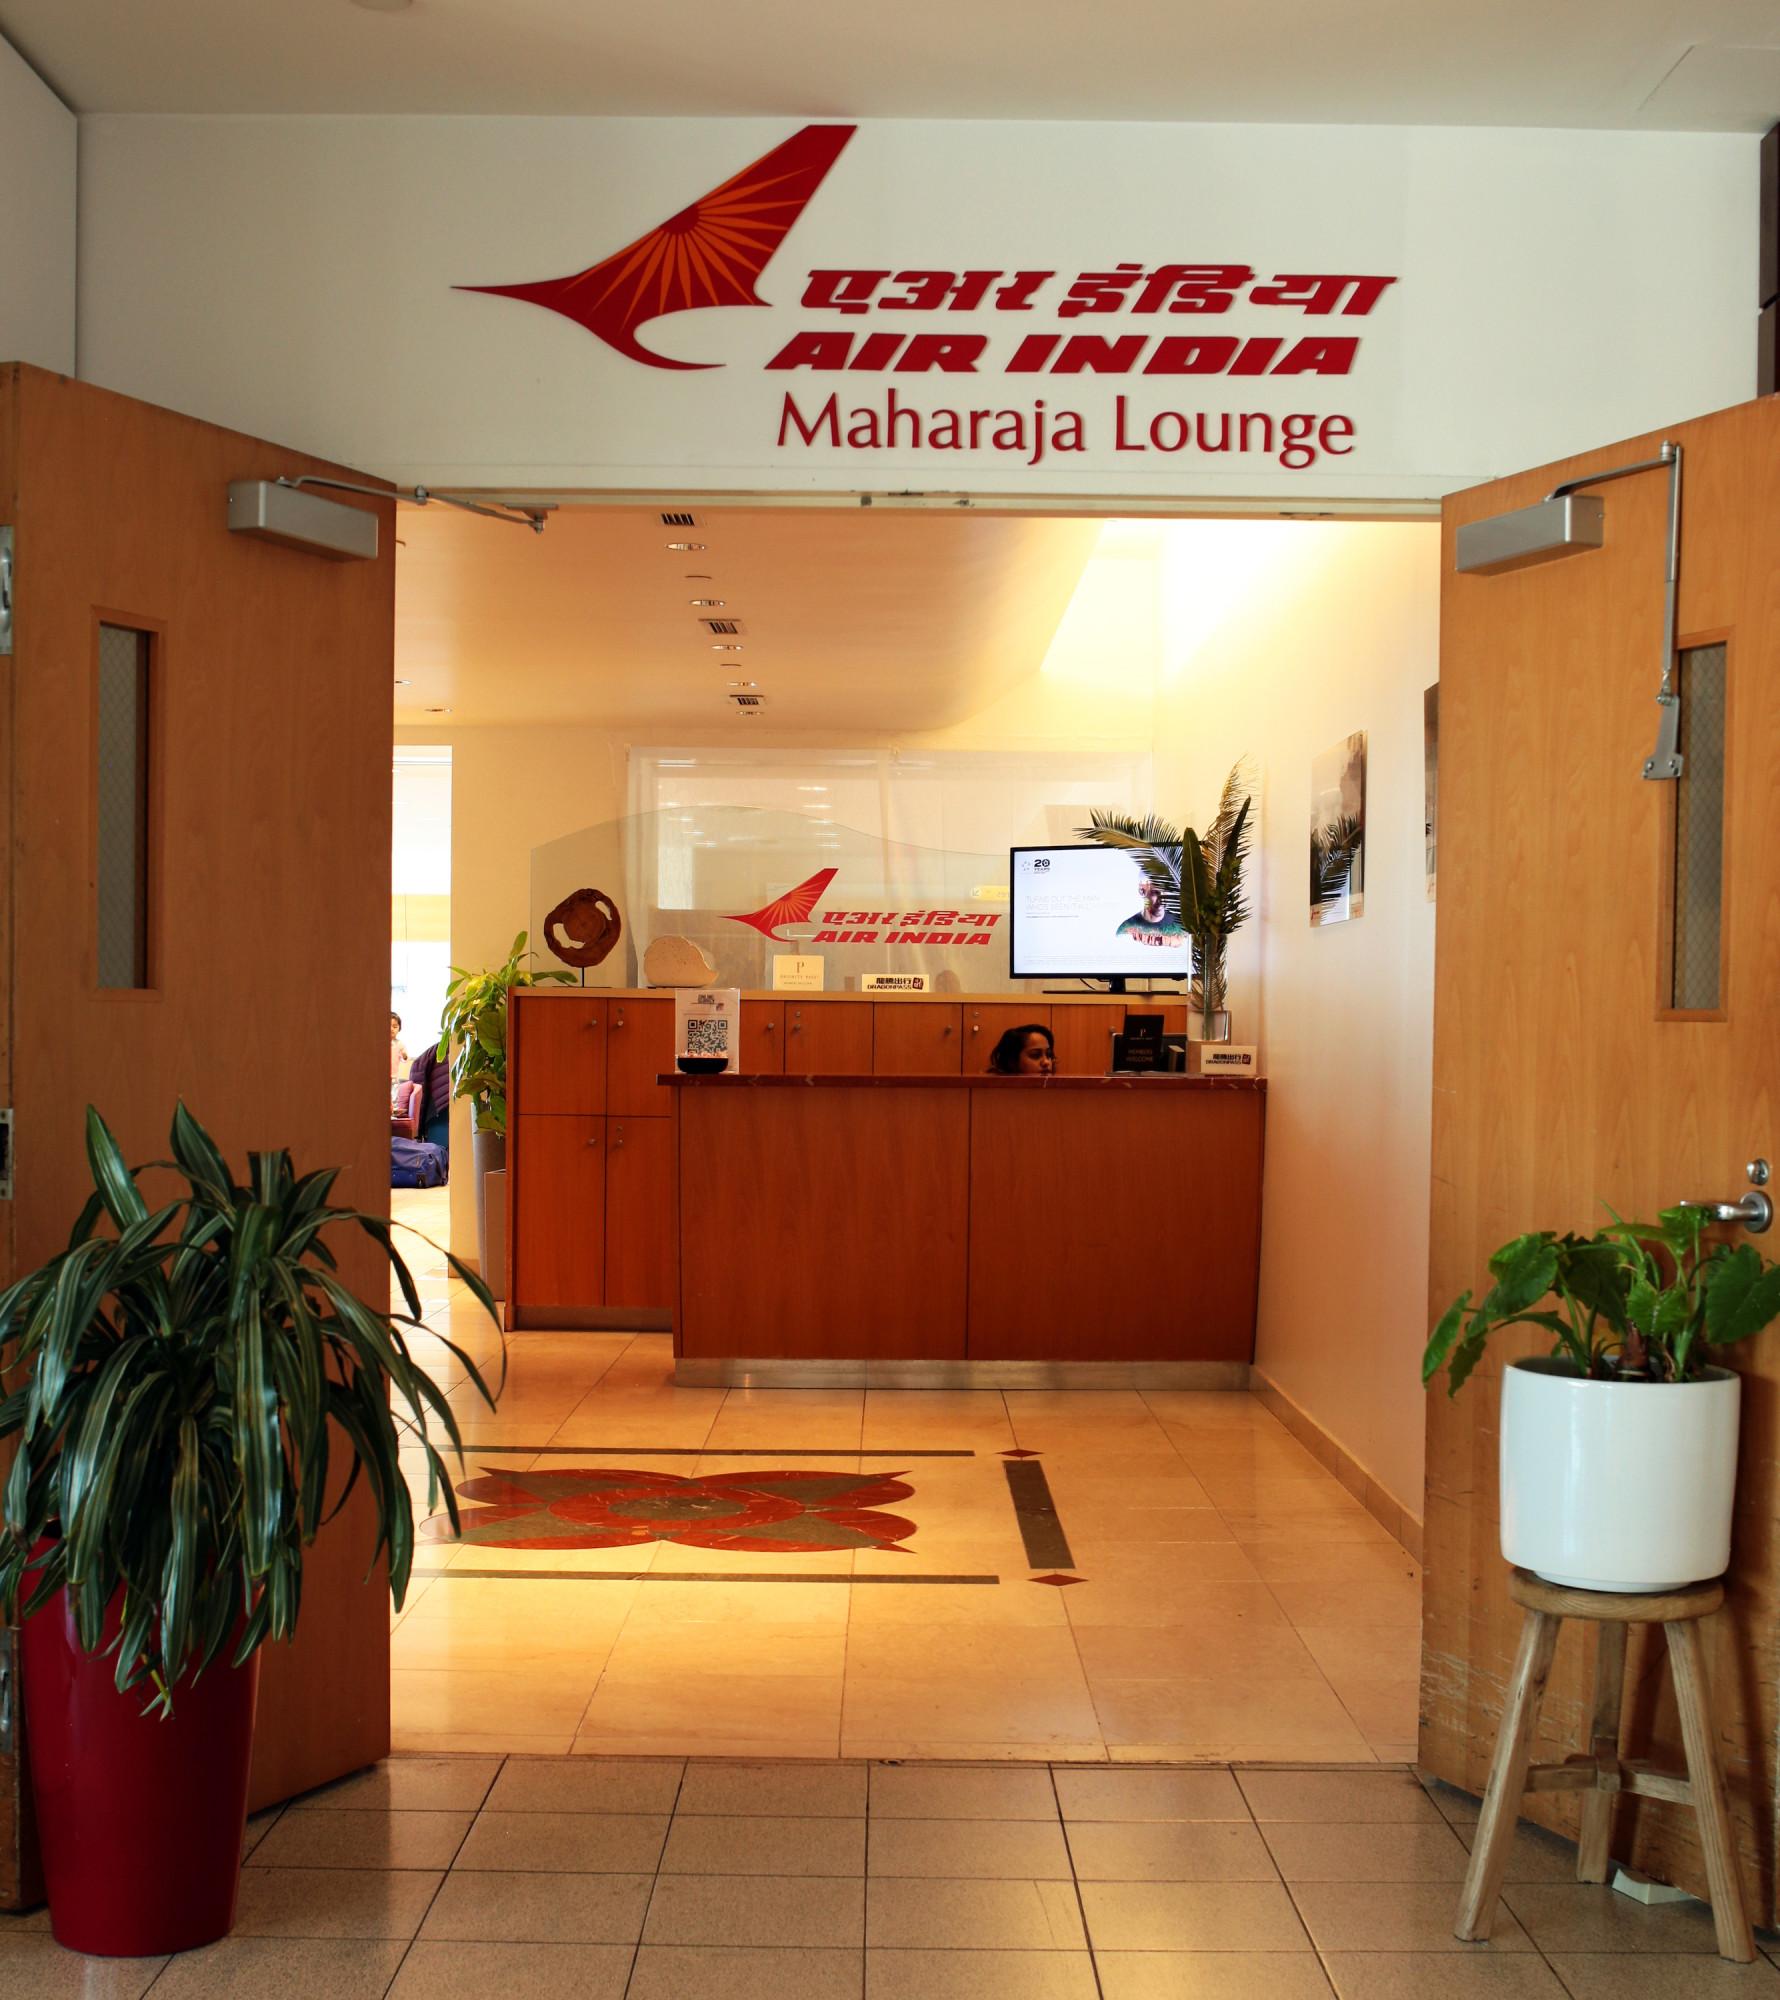 Air India Maharajah Lounge image 5 of 7